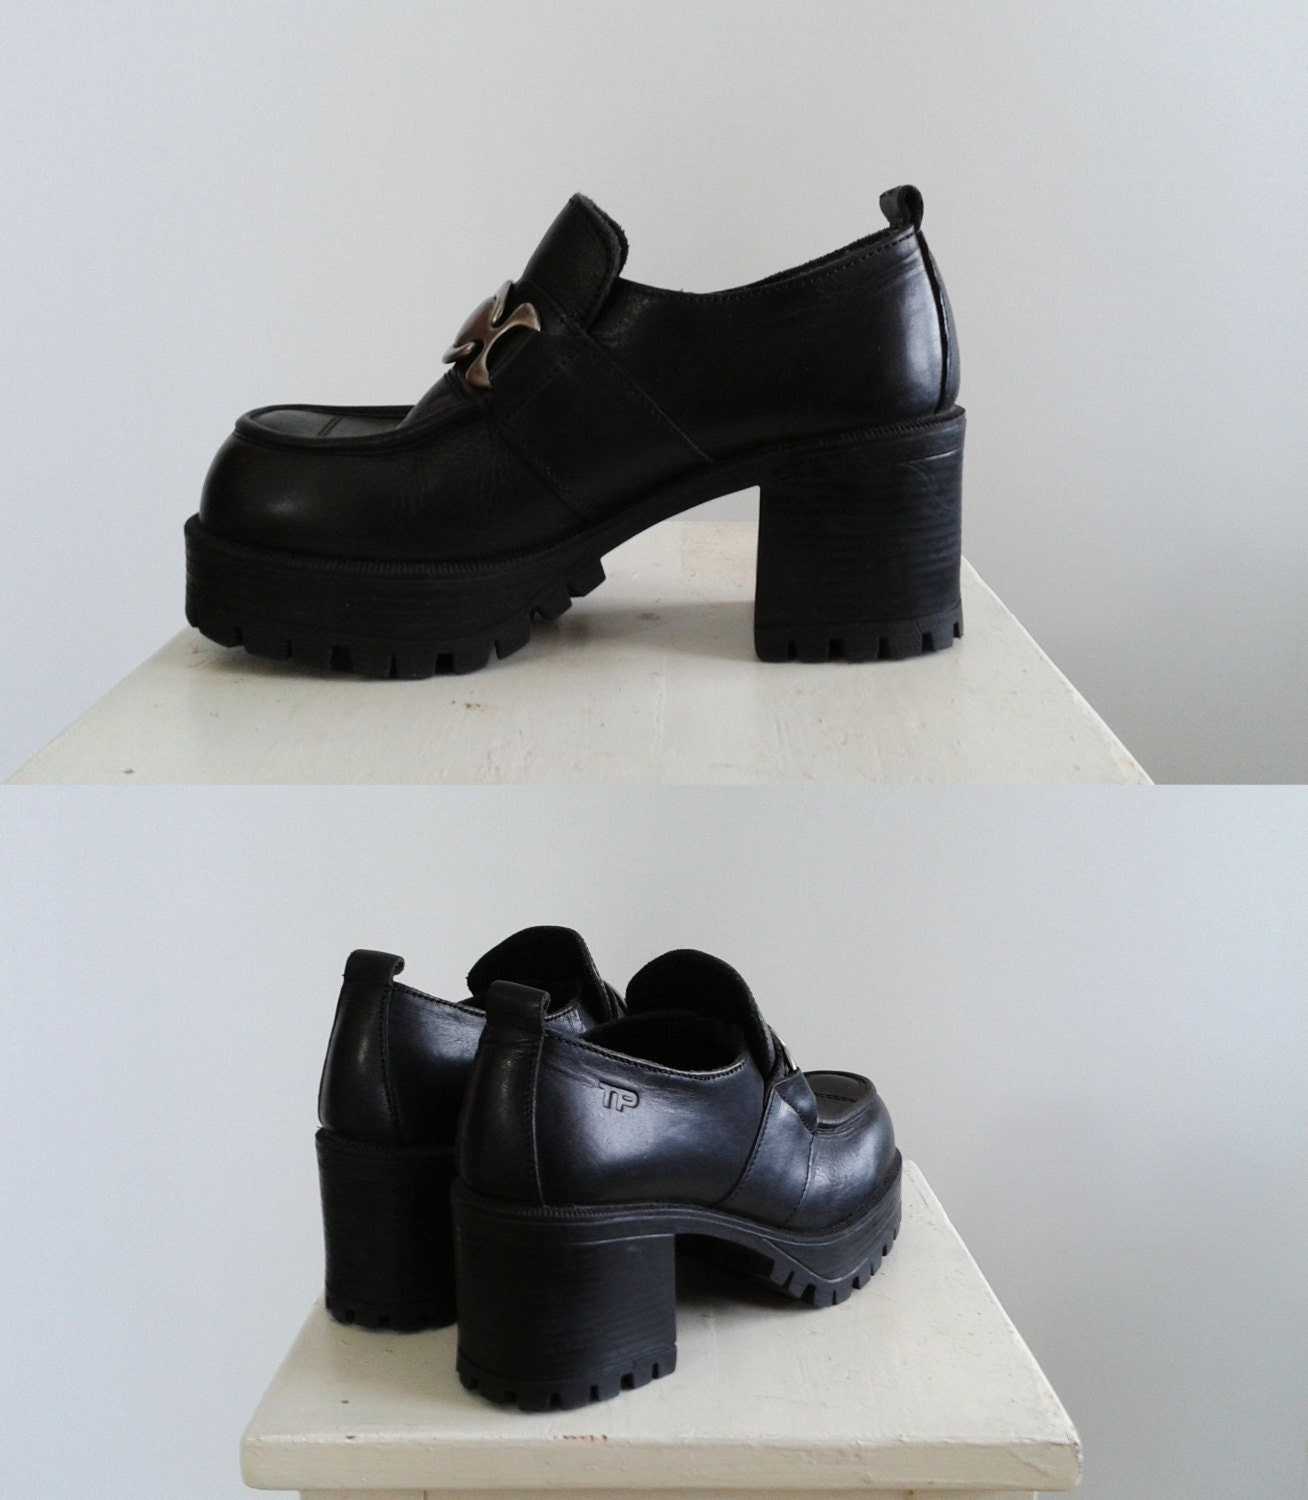 platform shoes Il_570xN.551469761_iz5u